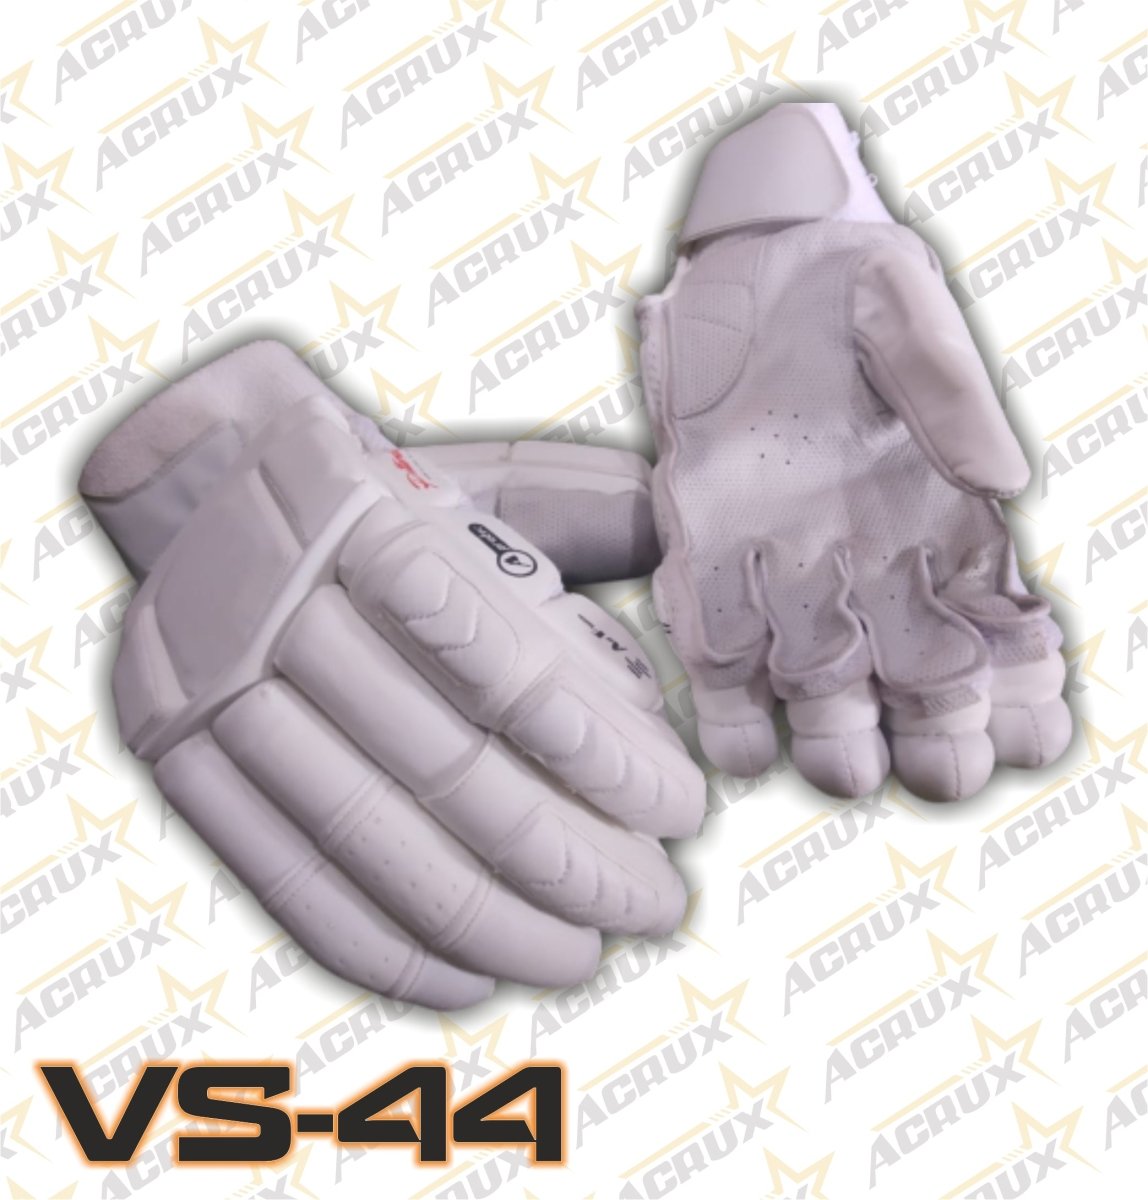 Cricket Batting Gloves VS-44 +Clean Skin Batting Pads Combo